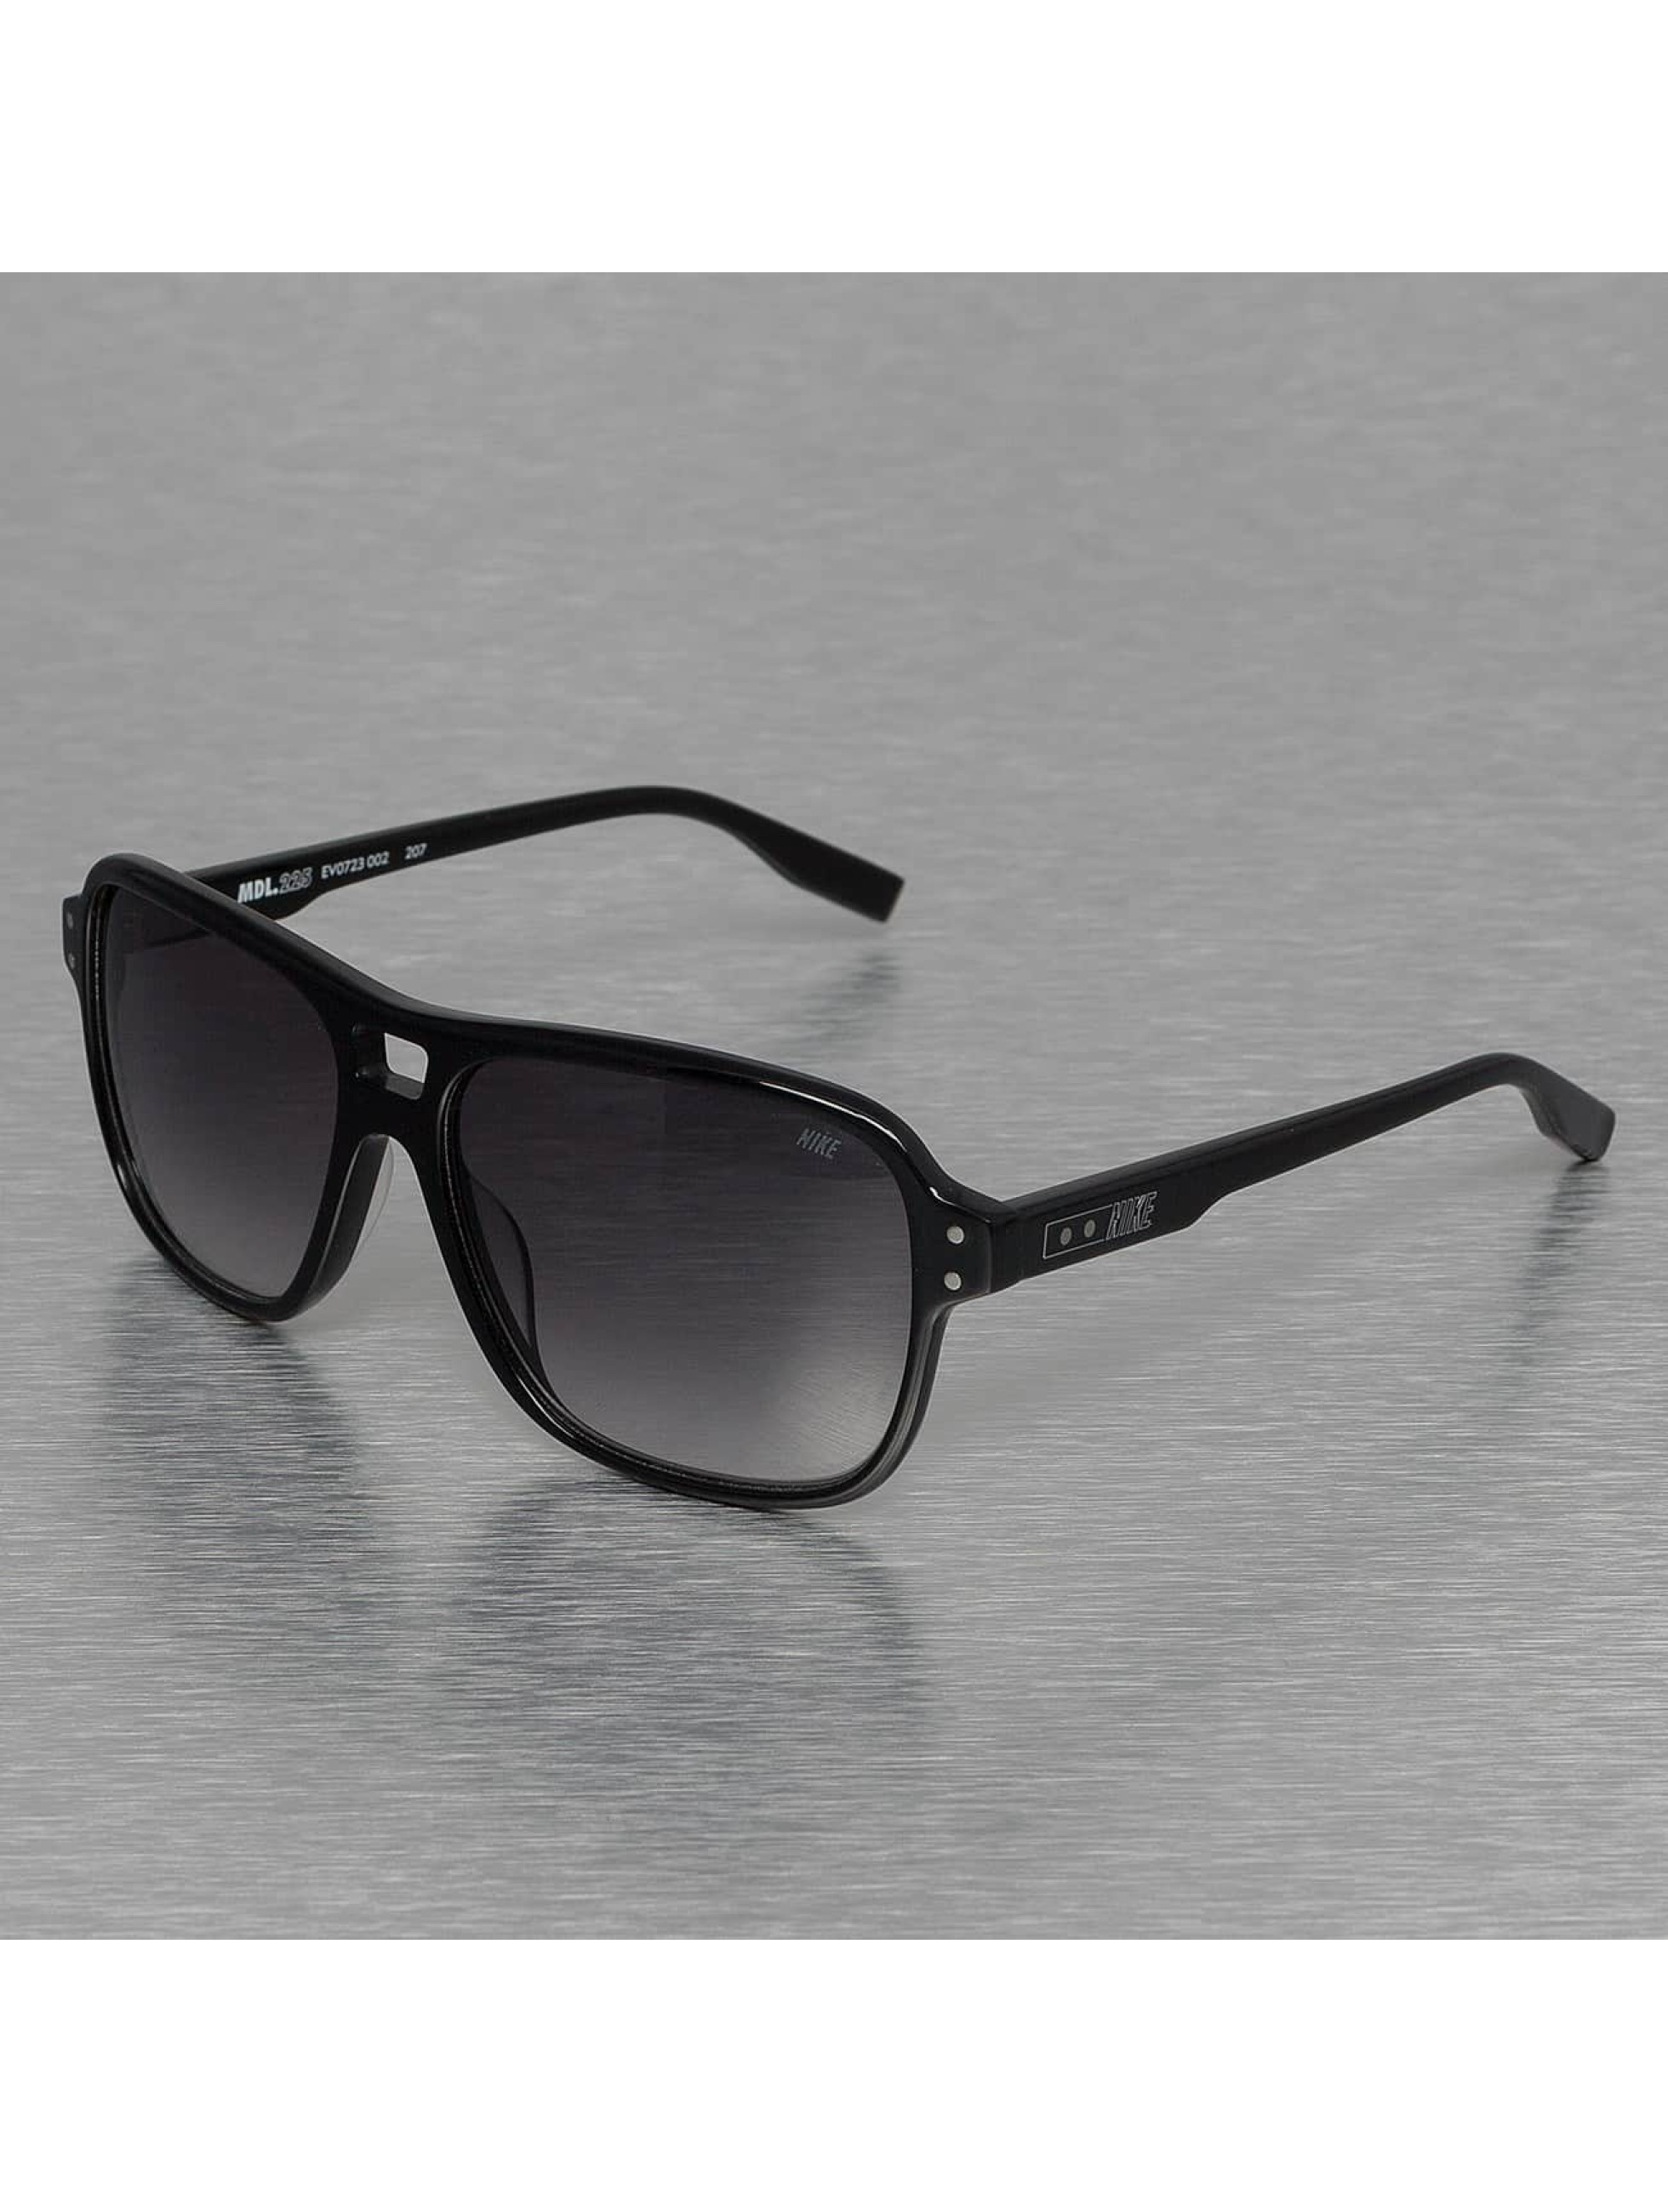 Nike Vision Accessoire / Sonnenbrille Model 225 in schwarz